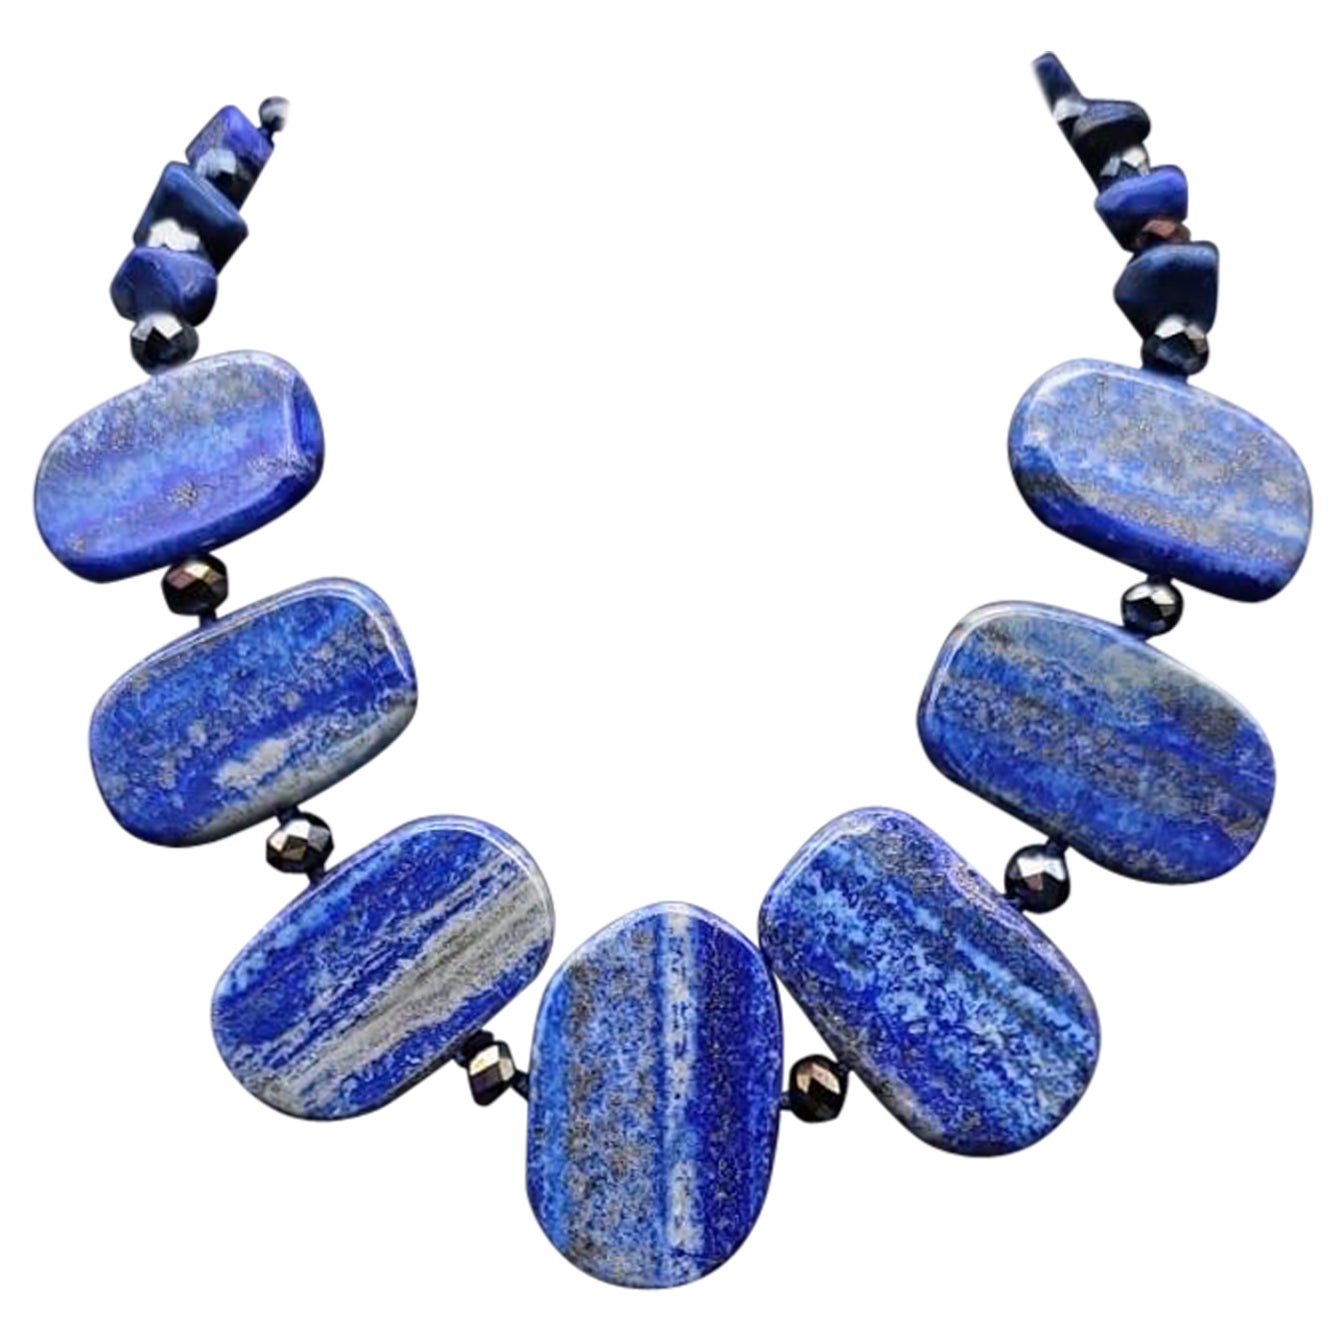 A.Jeschel Spectacular Lapis Lazuli plates necklace. For Sale